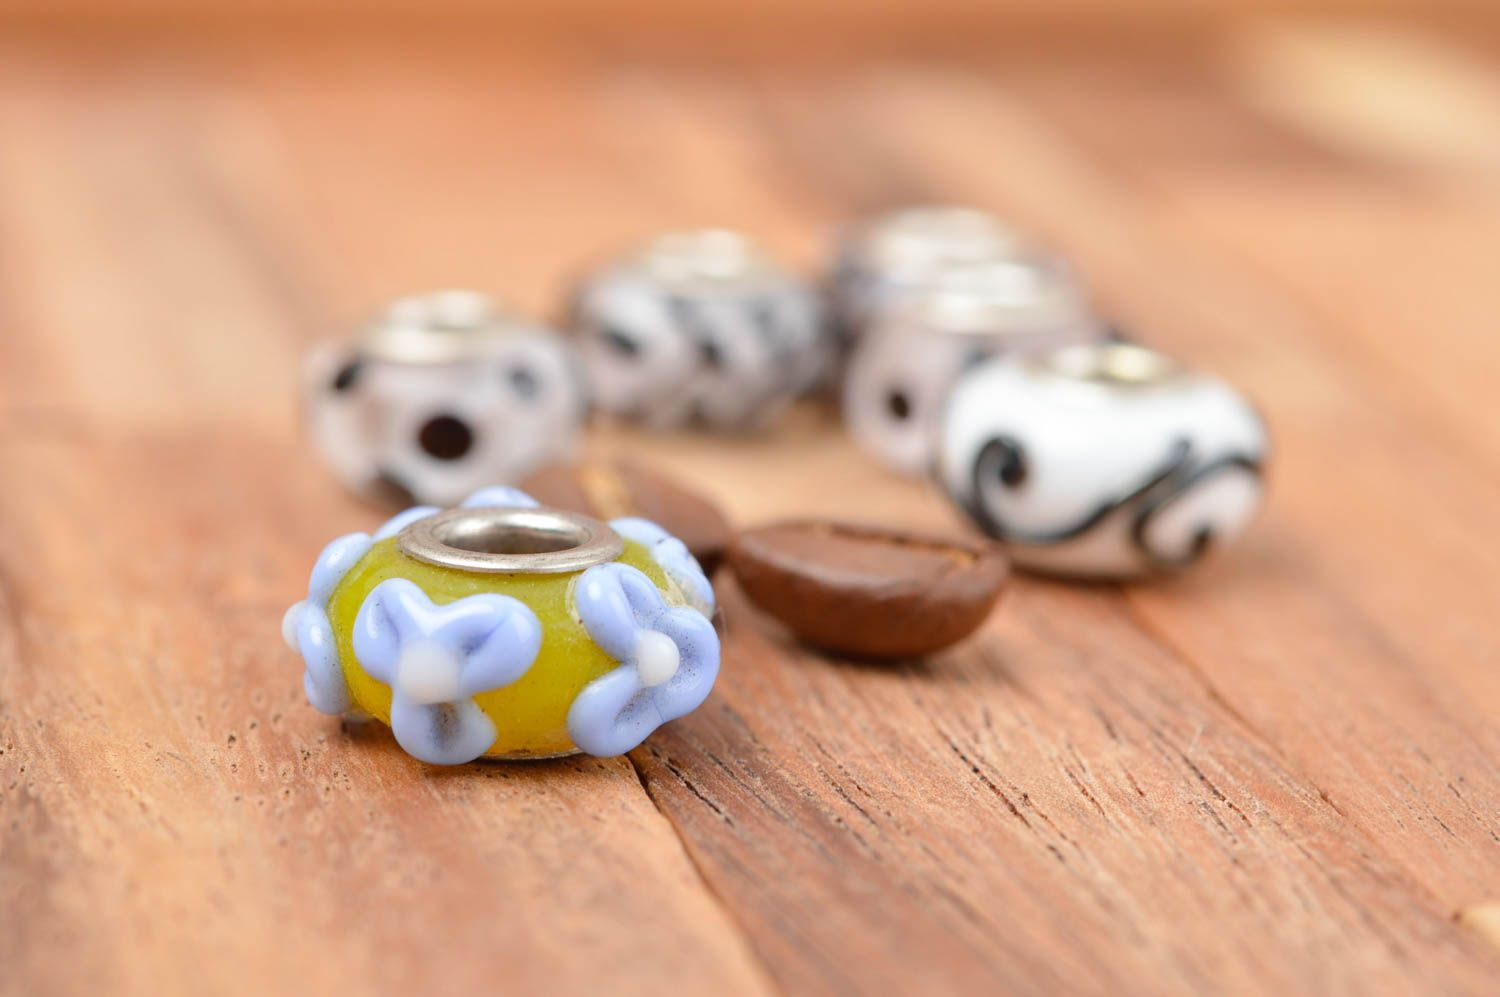 Unusual handmade glass bead jewelry findings jewelry making supplies gift ideas photo 1